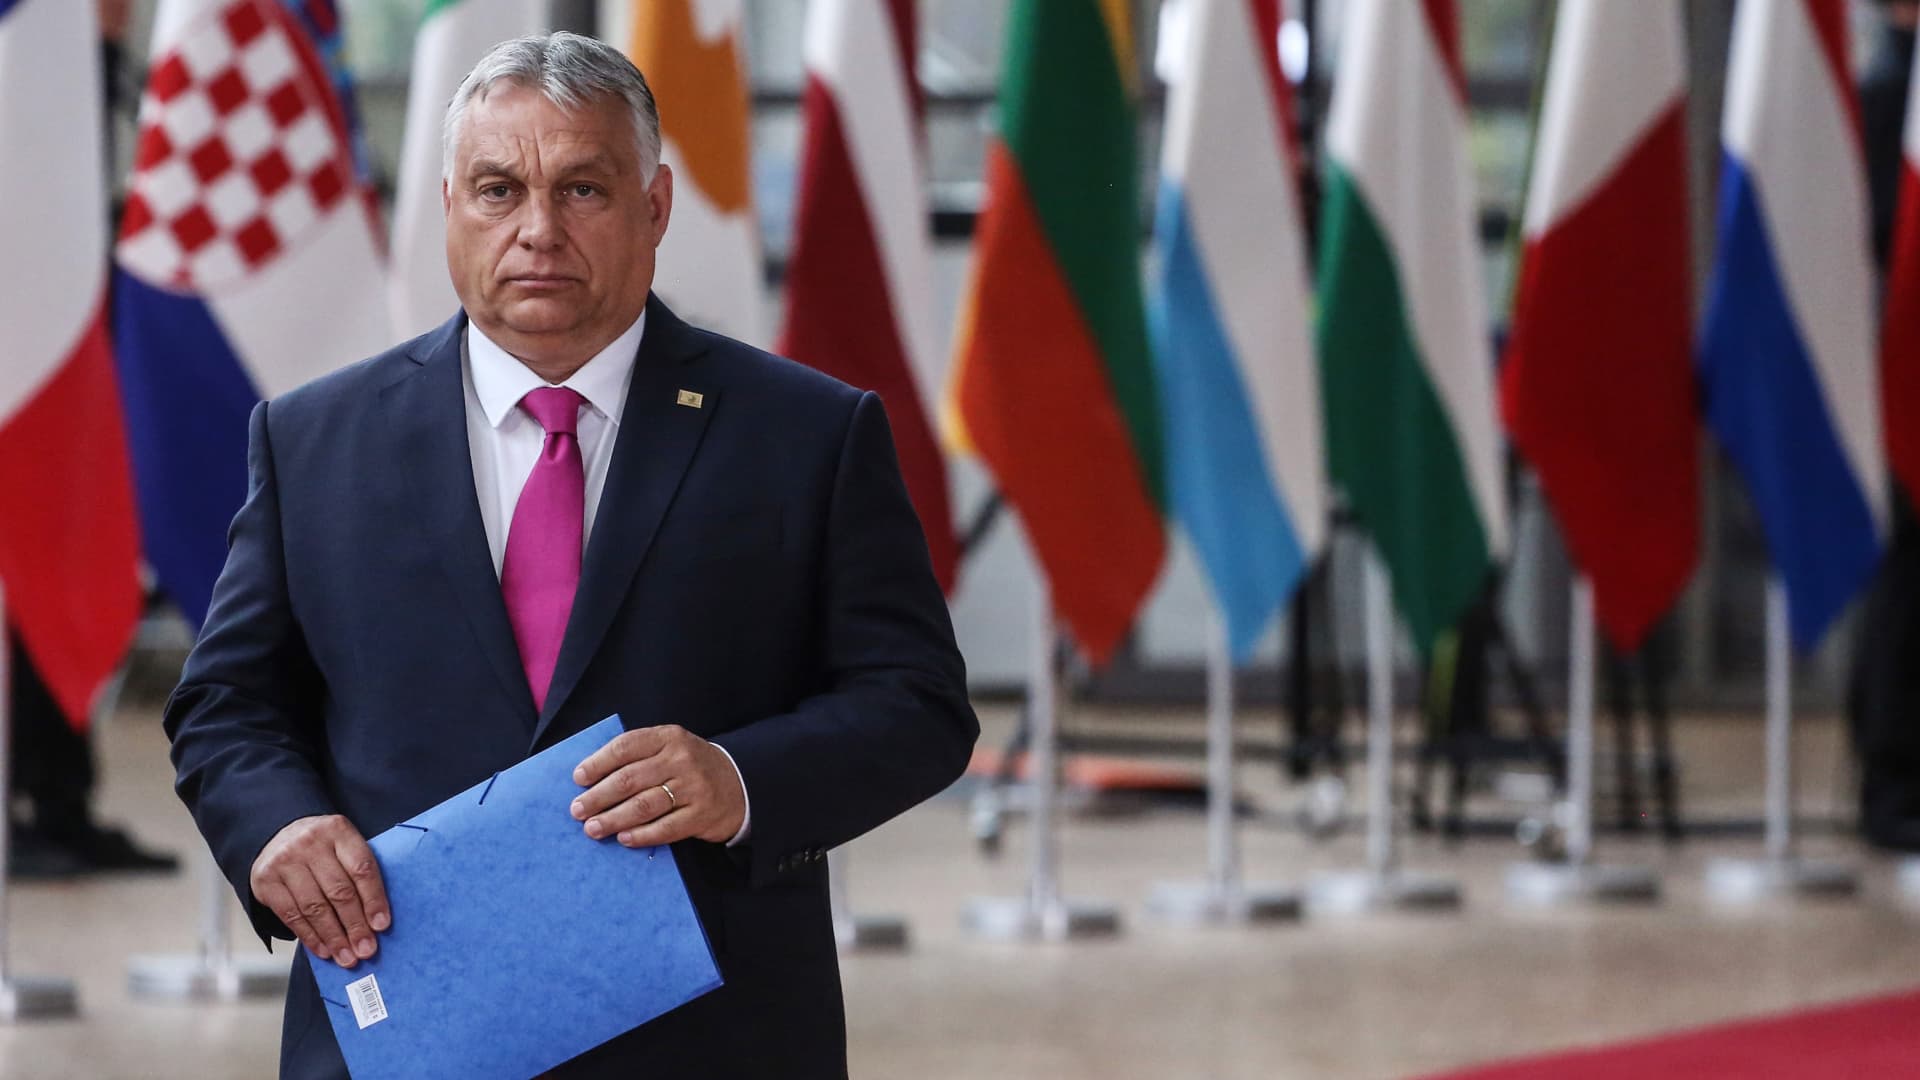 Hungary accuses EU of blackmail over Ukraine aid standoff